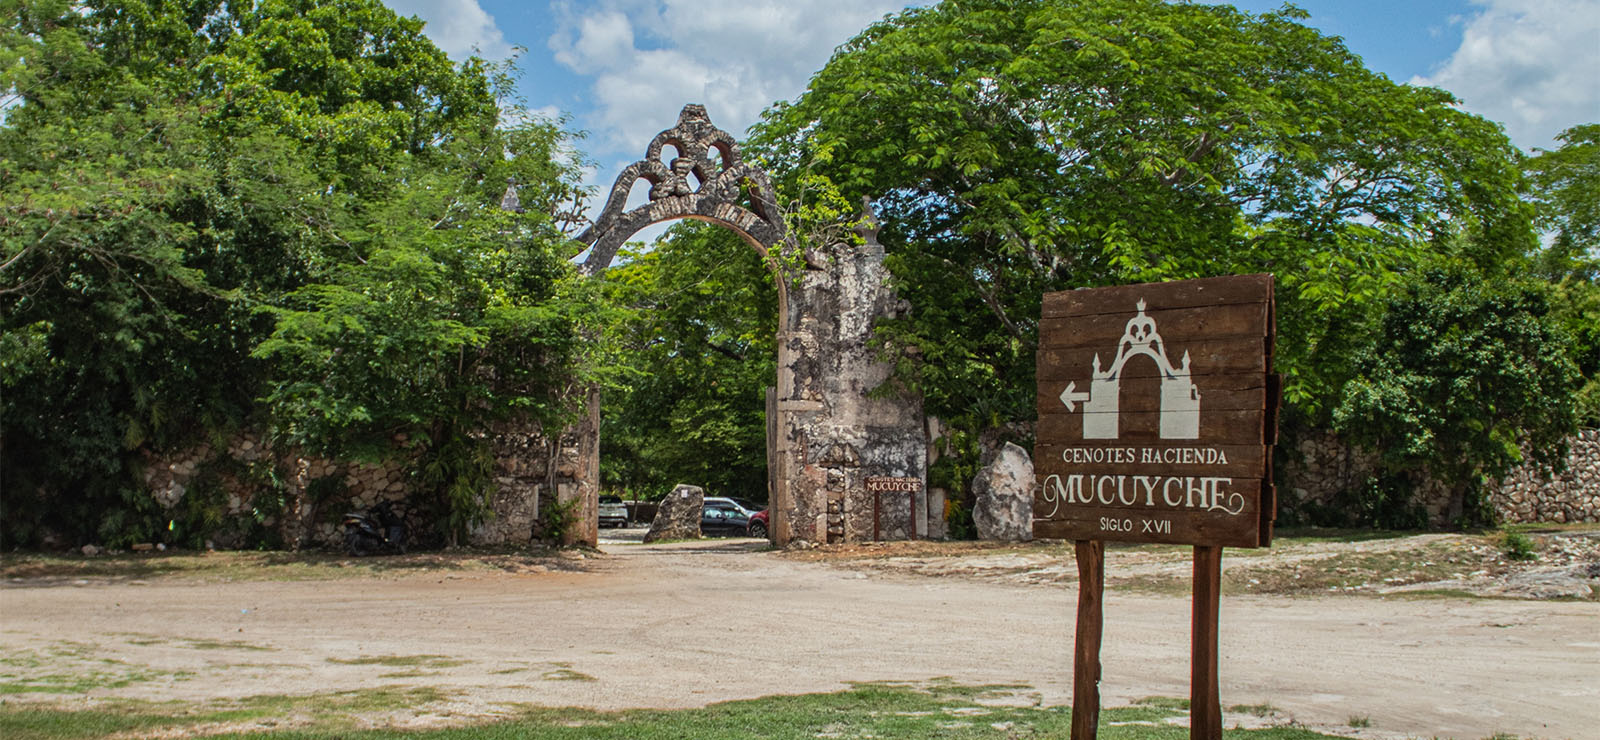 Cenotes Hacienda Mucuyché